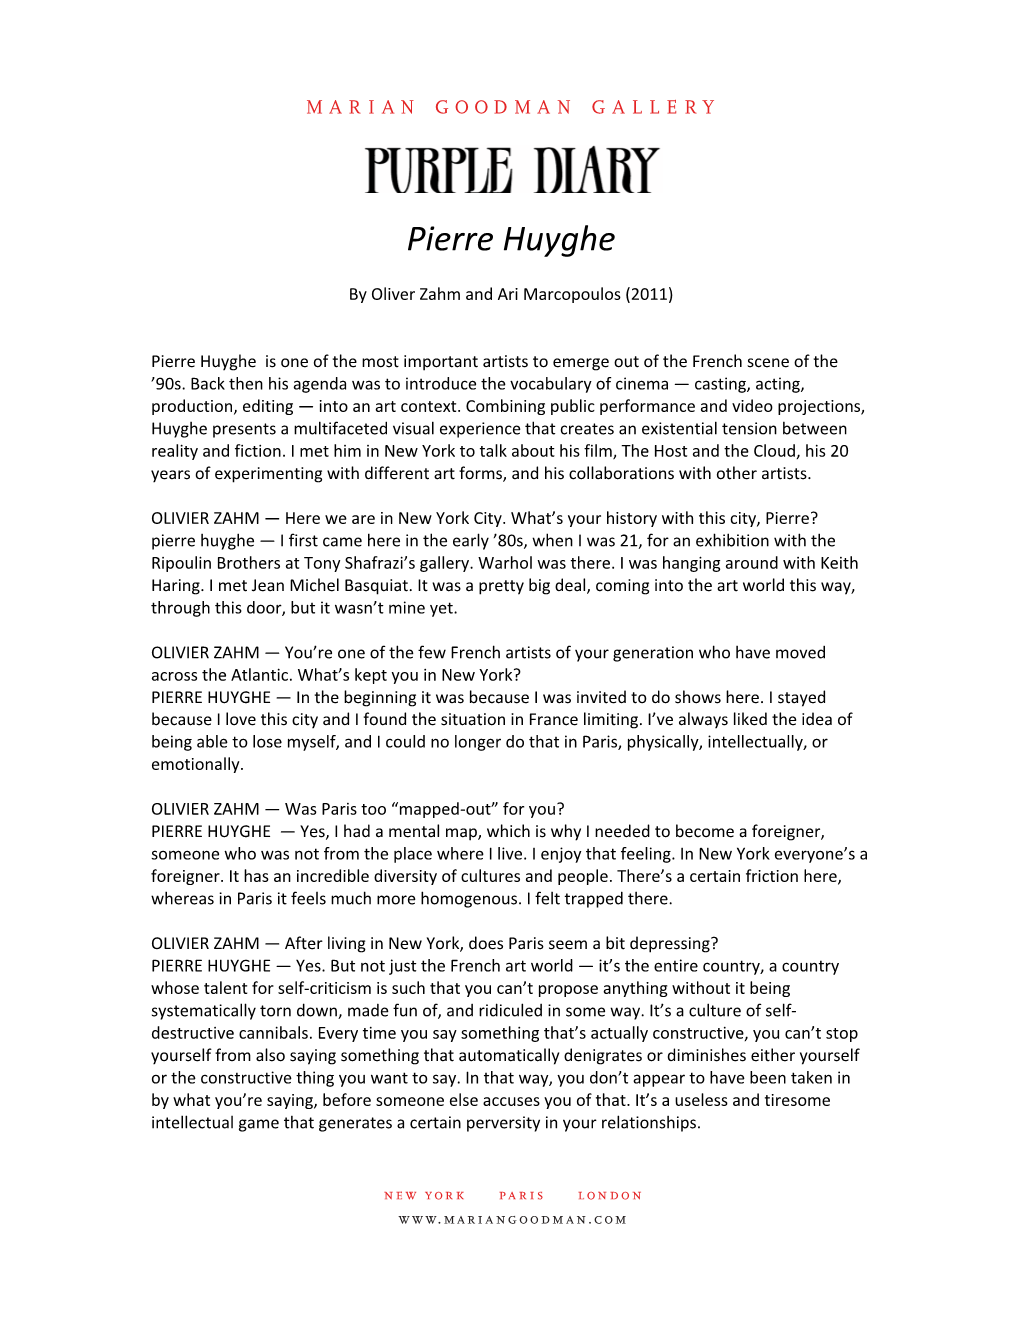 Press Pierre Huyghe Purple Diary, 2011